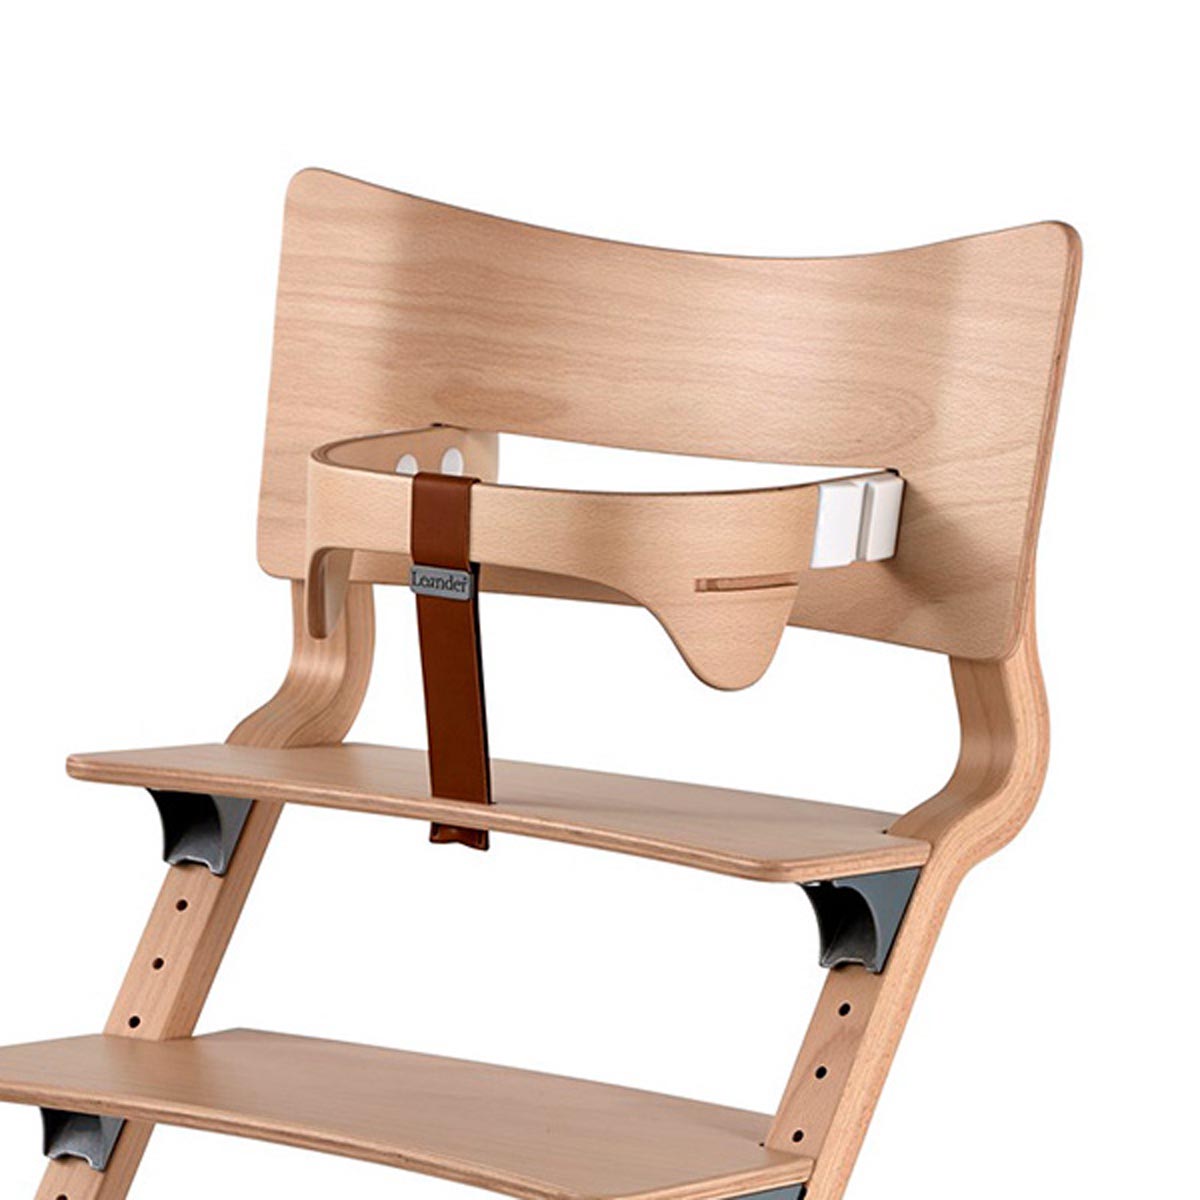 Leander Classic High Chair Safety Bar